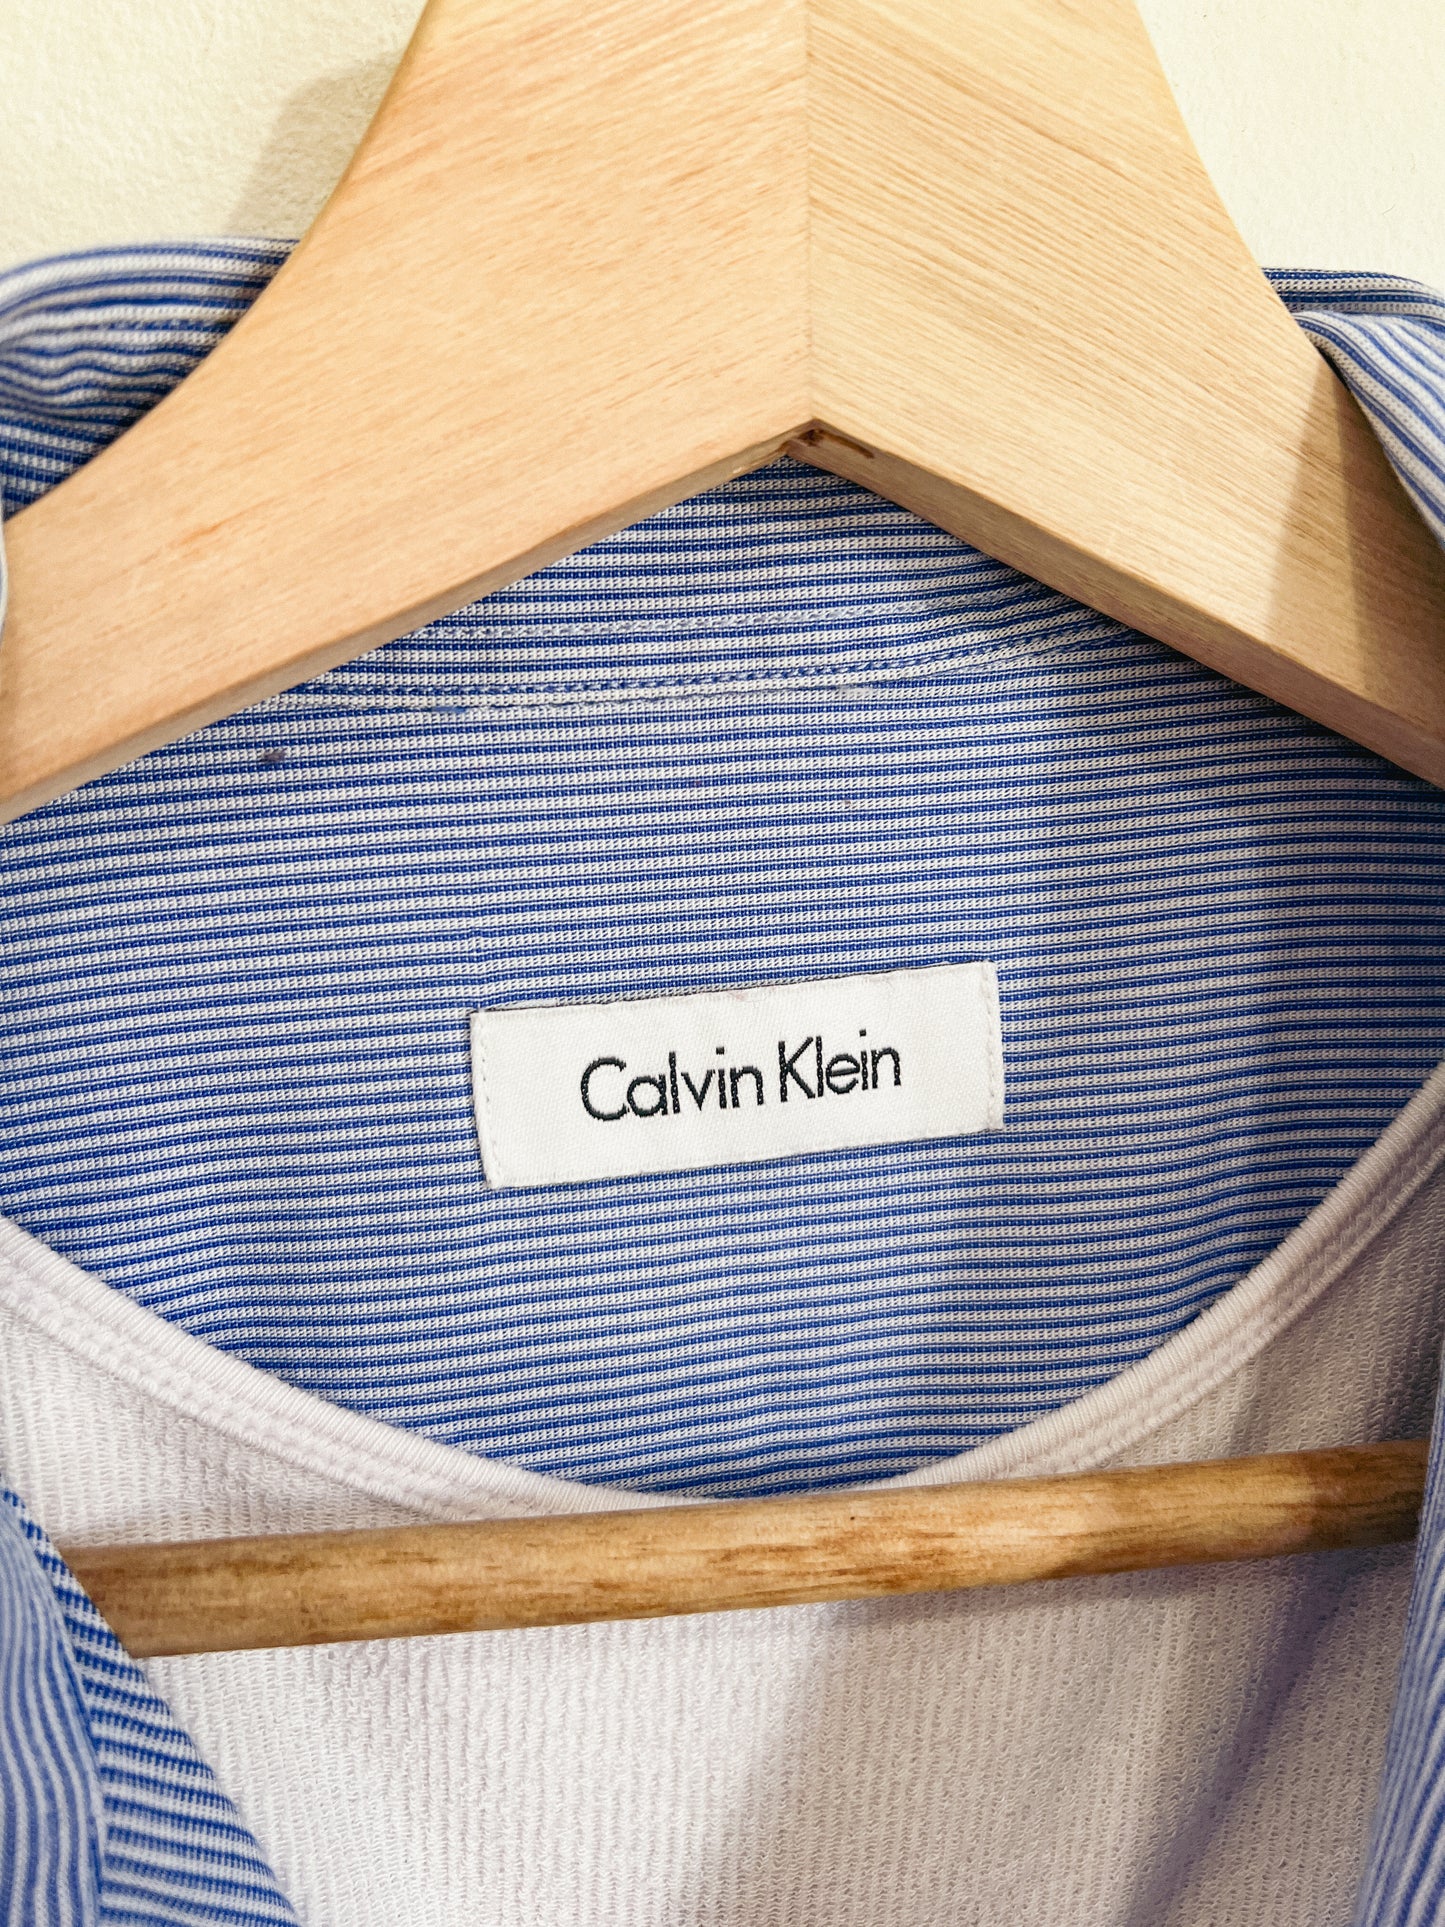 Calvin Klein Blue & White Pinstriped Button Down (Size L)